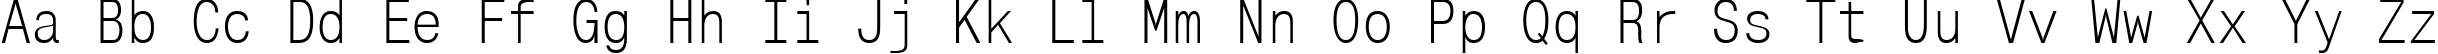 Пример написания английского алфавита шрифтом Mono Condensed